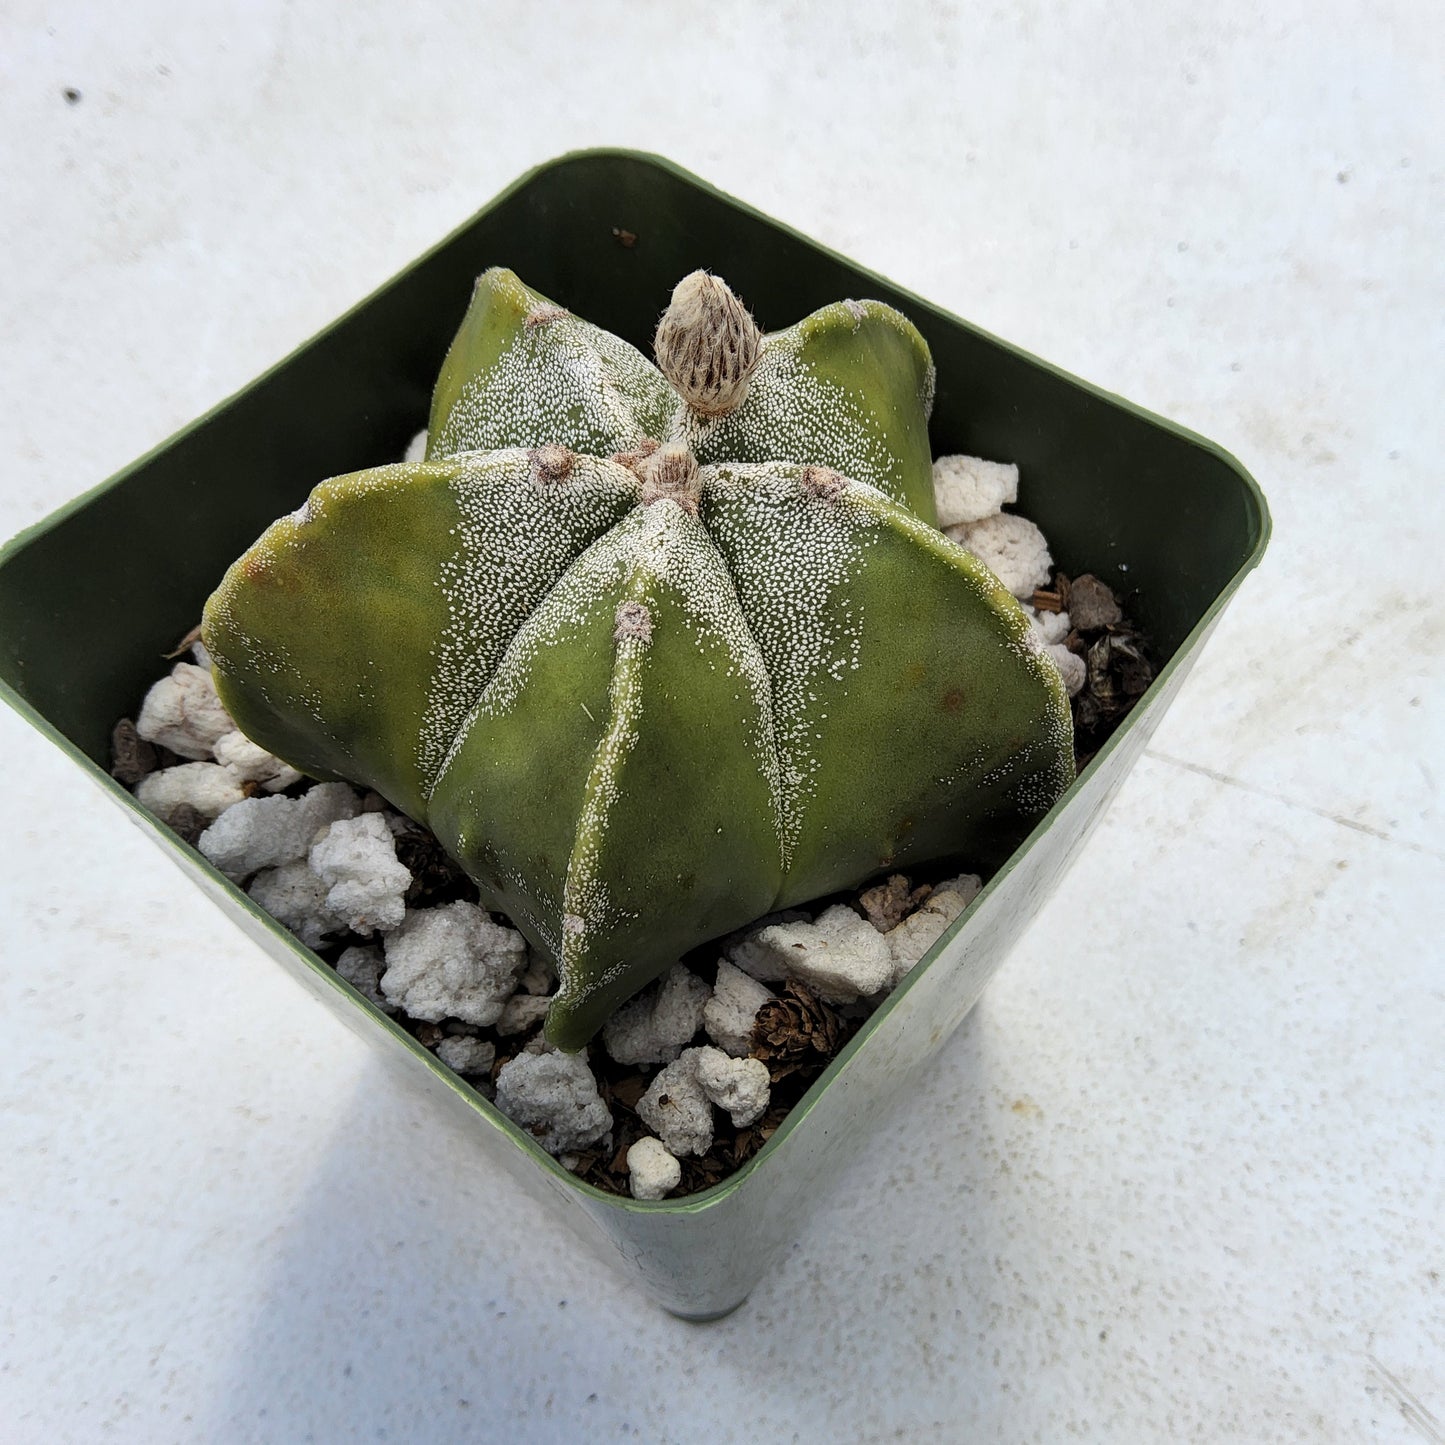 Astrophytum myriostigma Live Cactus In 4 Inch